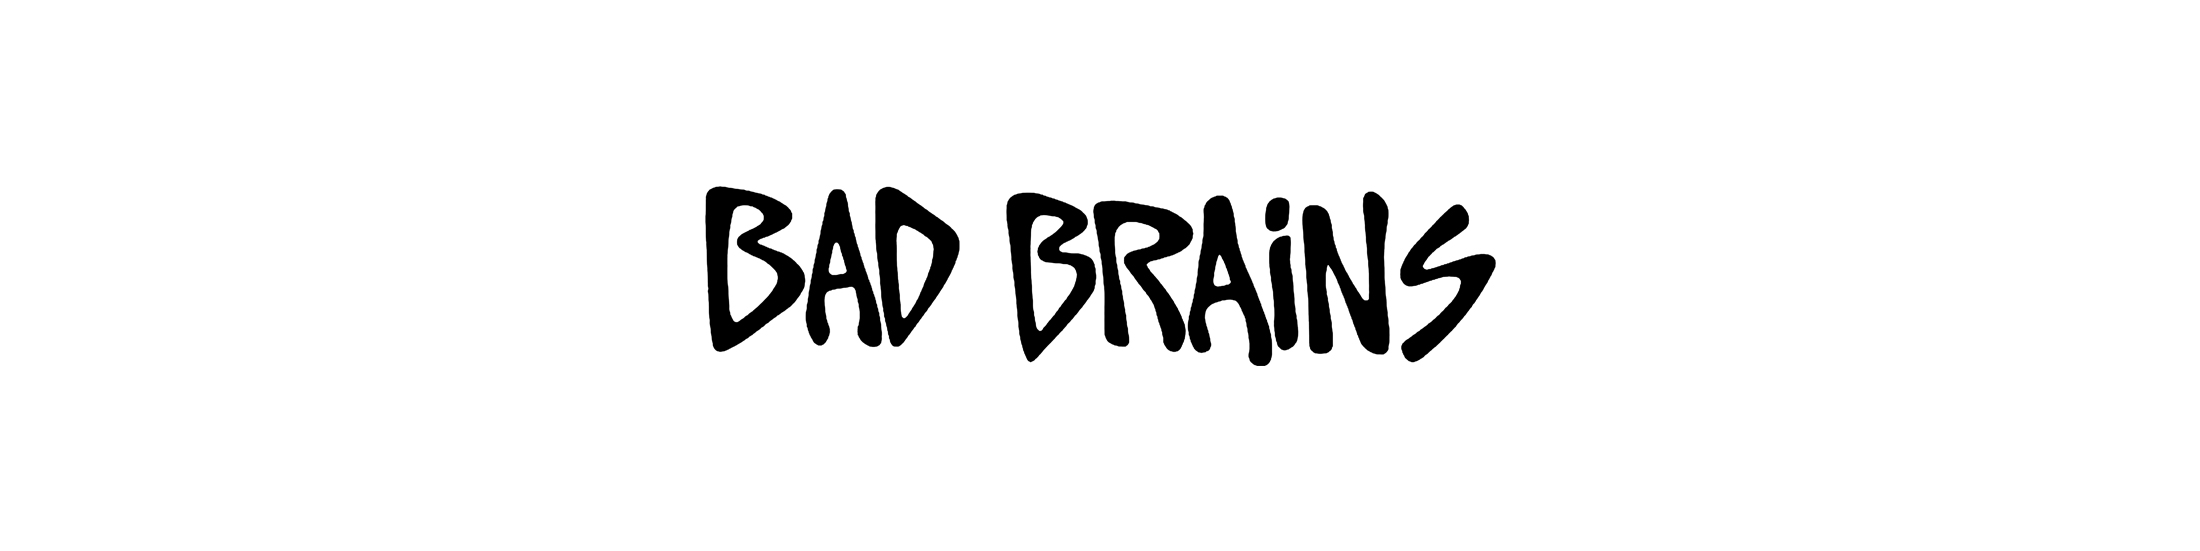 Bad Brains-Bad Brains Cassette